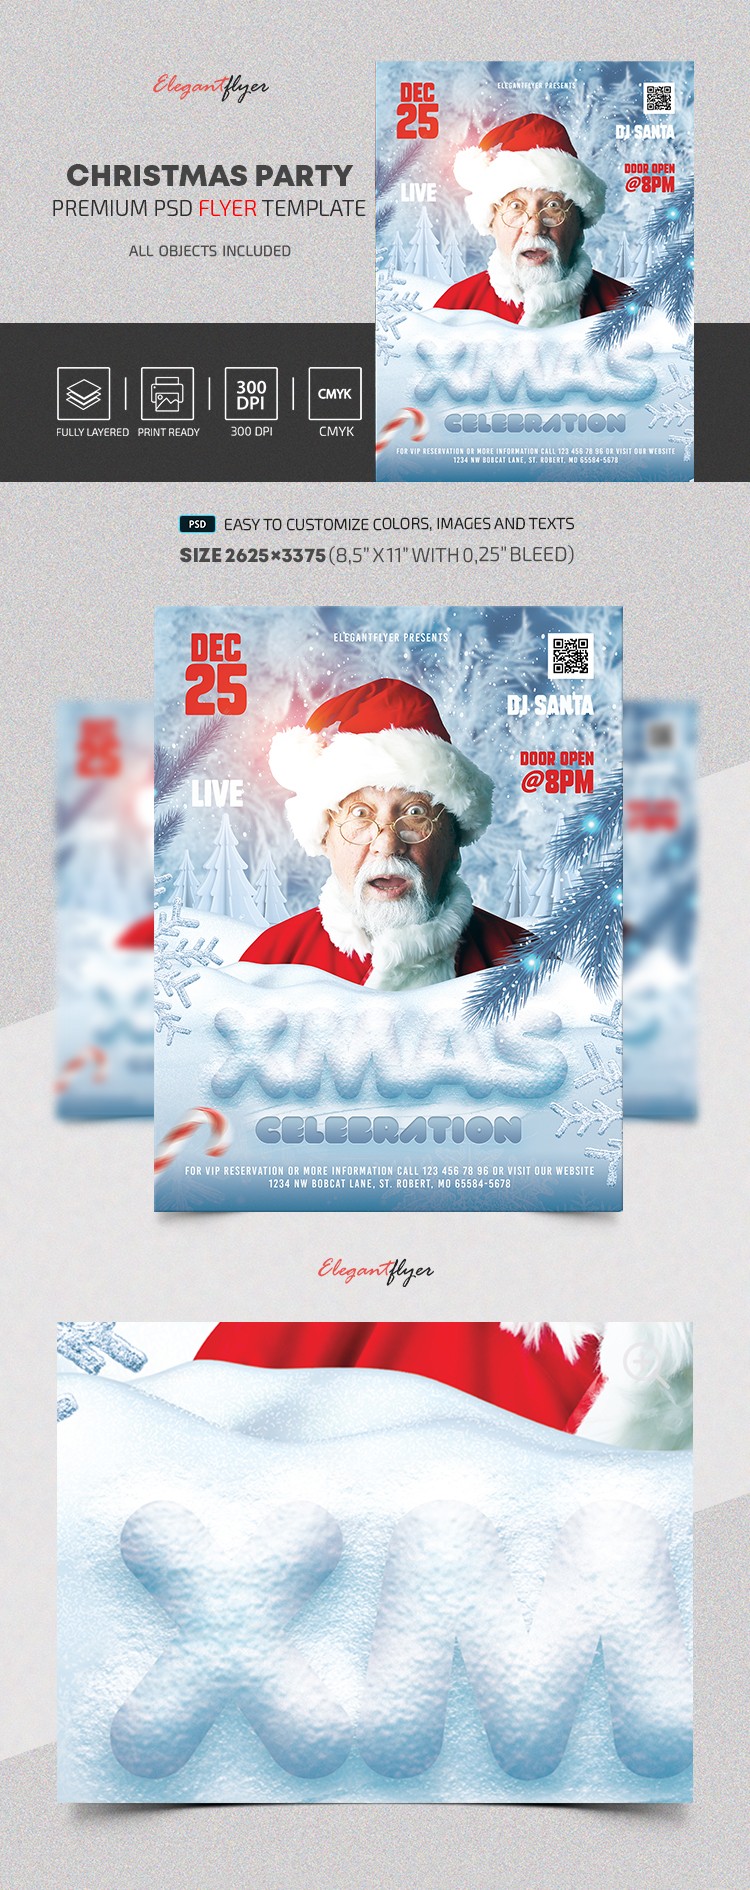 Christmas Party Flyer by ElegantFlyer